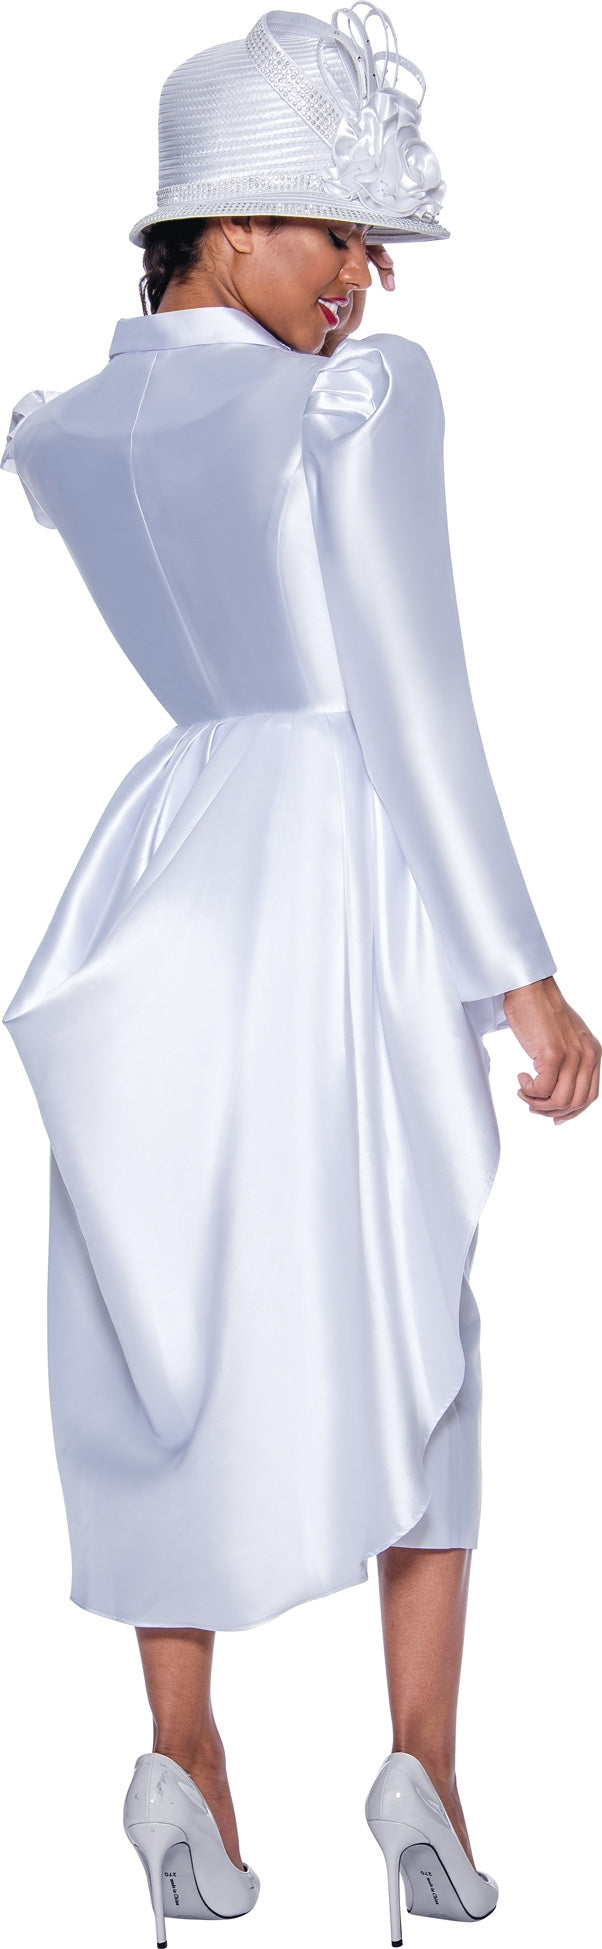 GMI Church Suit 9432C-White